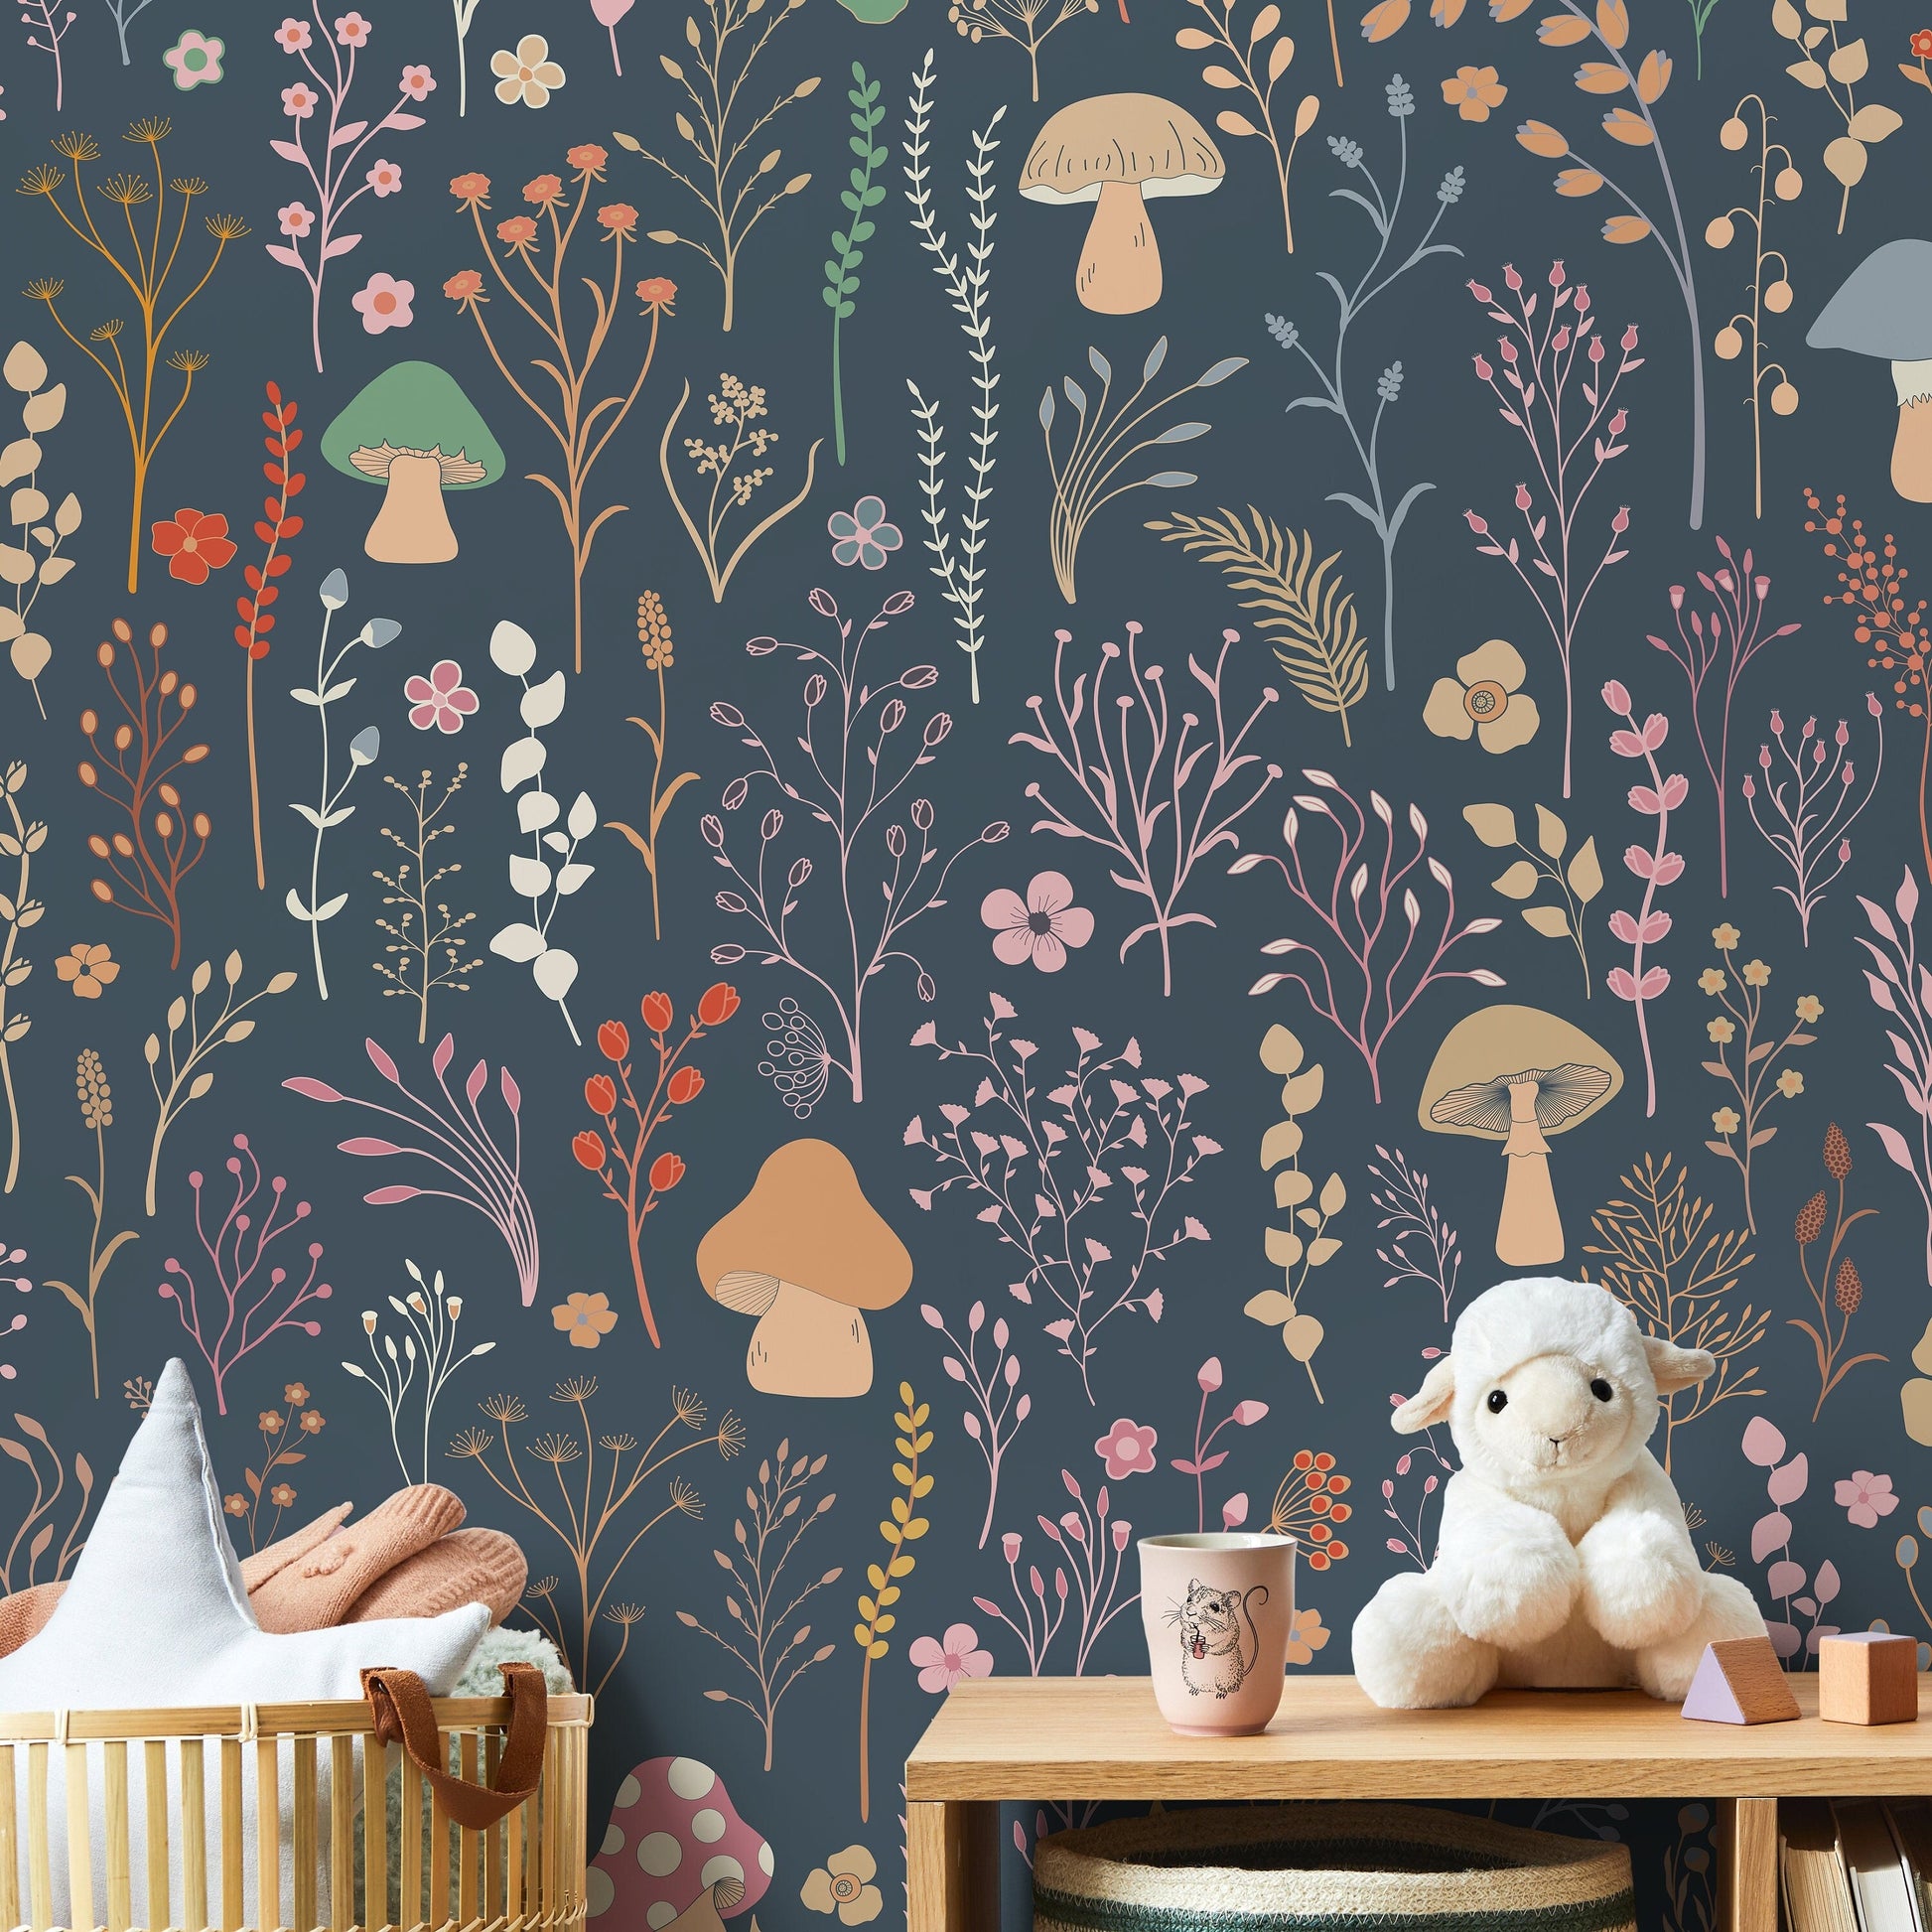 Floral Garden Wallpaper Fun Mushroom Wallpaper Peel and Stick and Traditional Wallpaper - D910